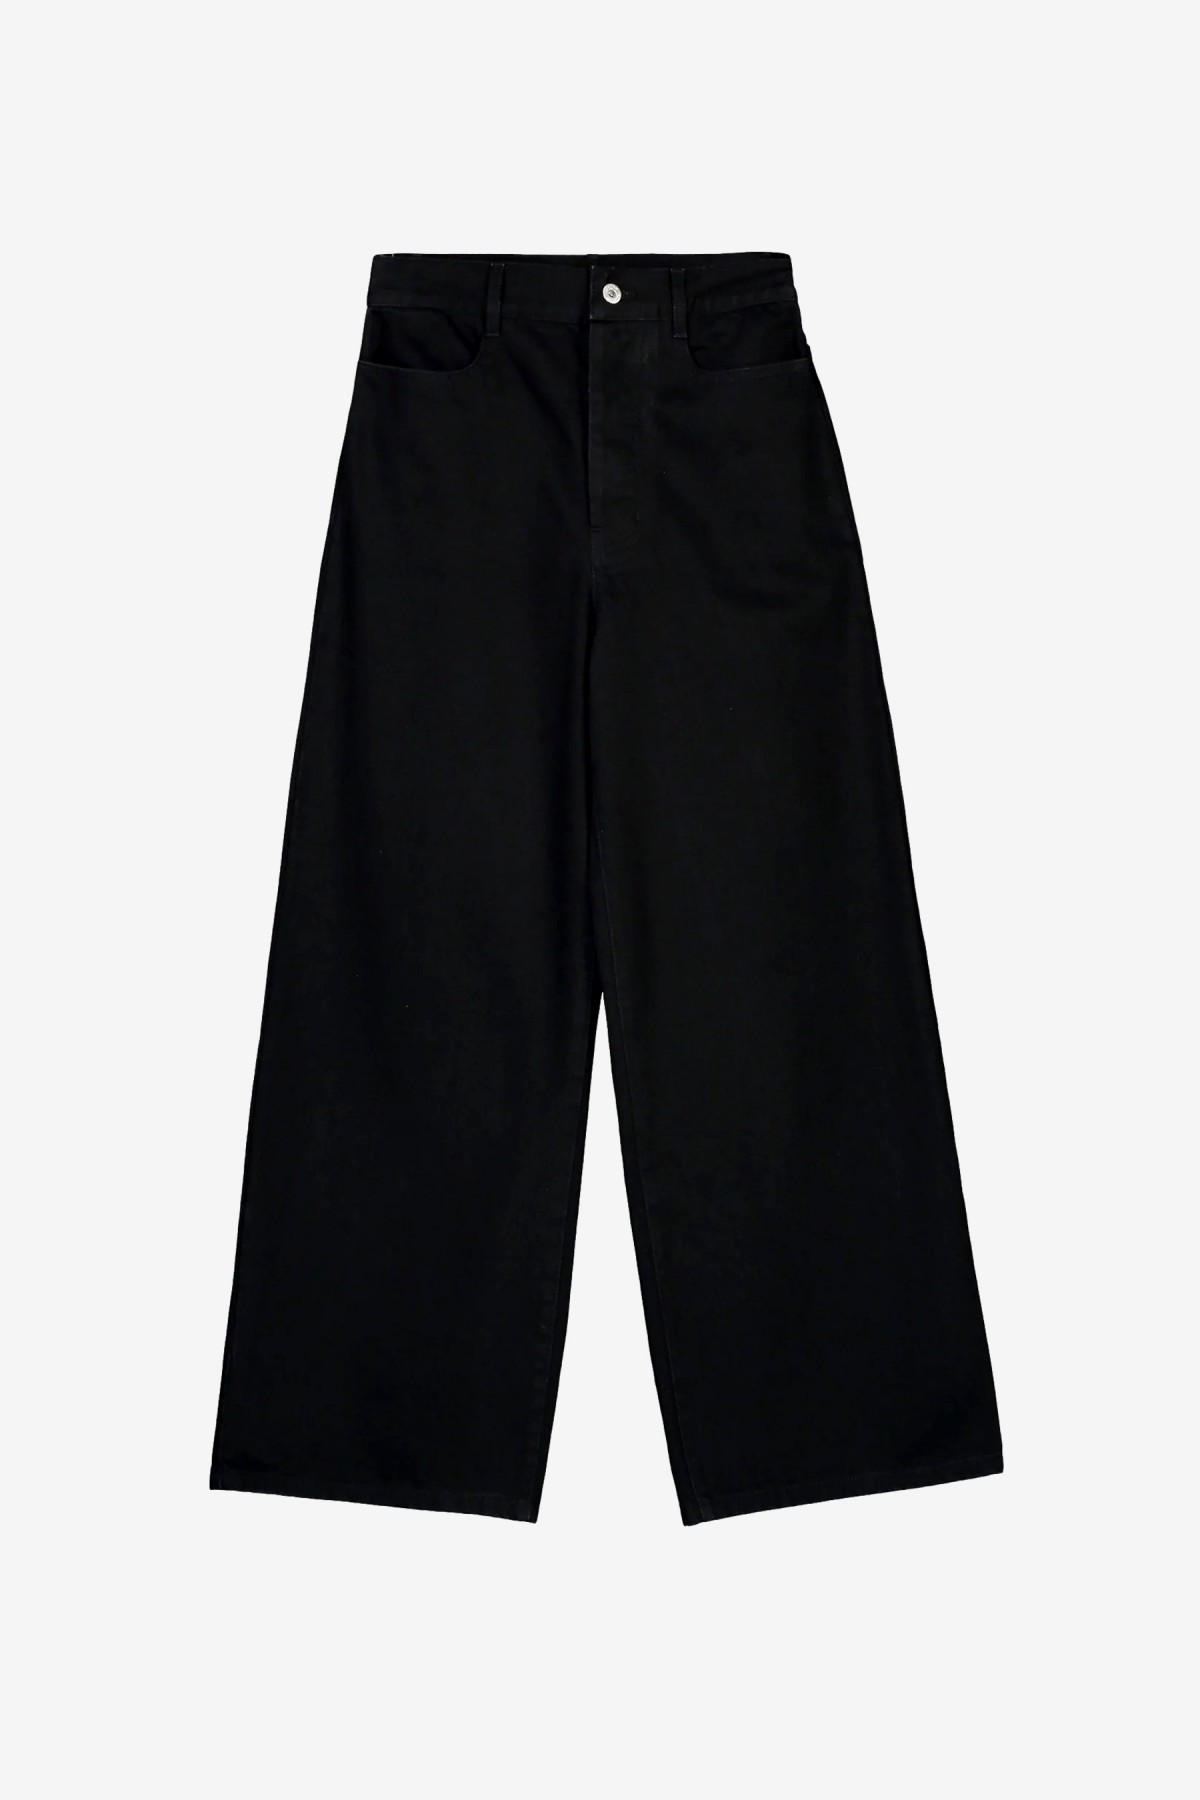 Kowtow Sailor Jeans in Black Denim